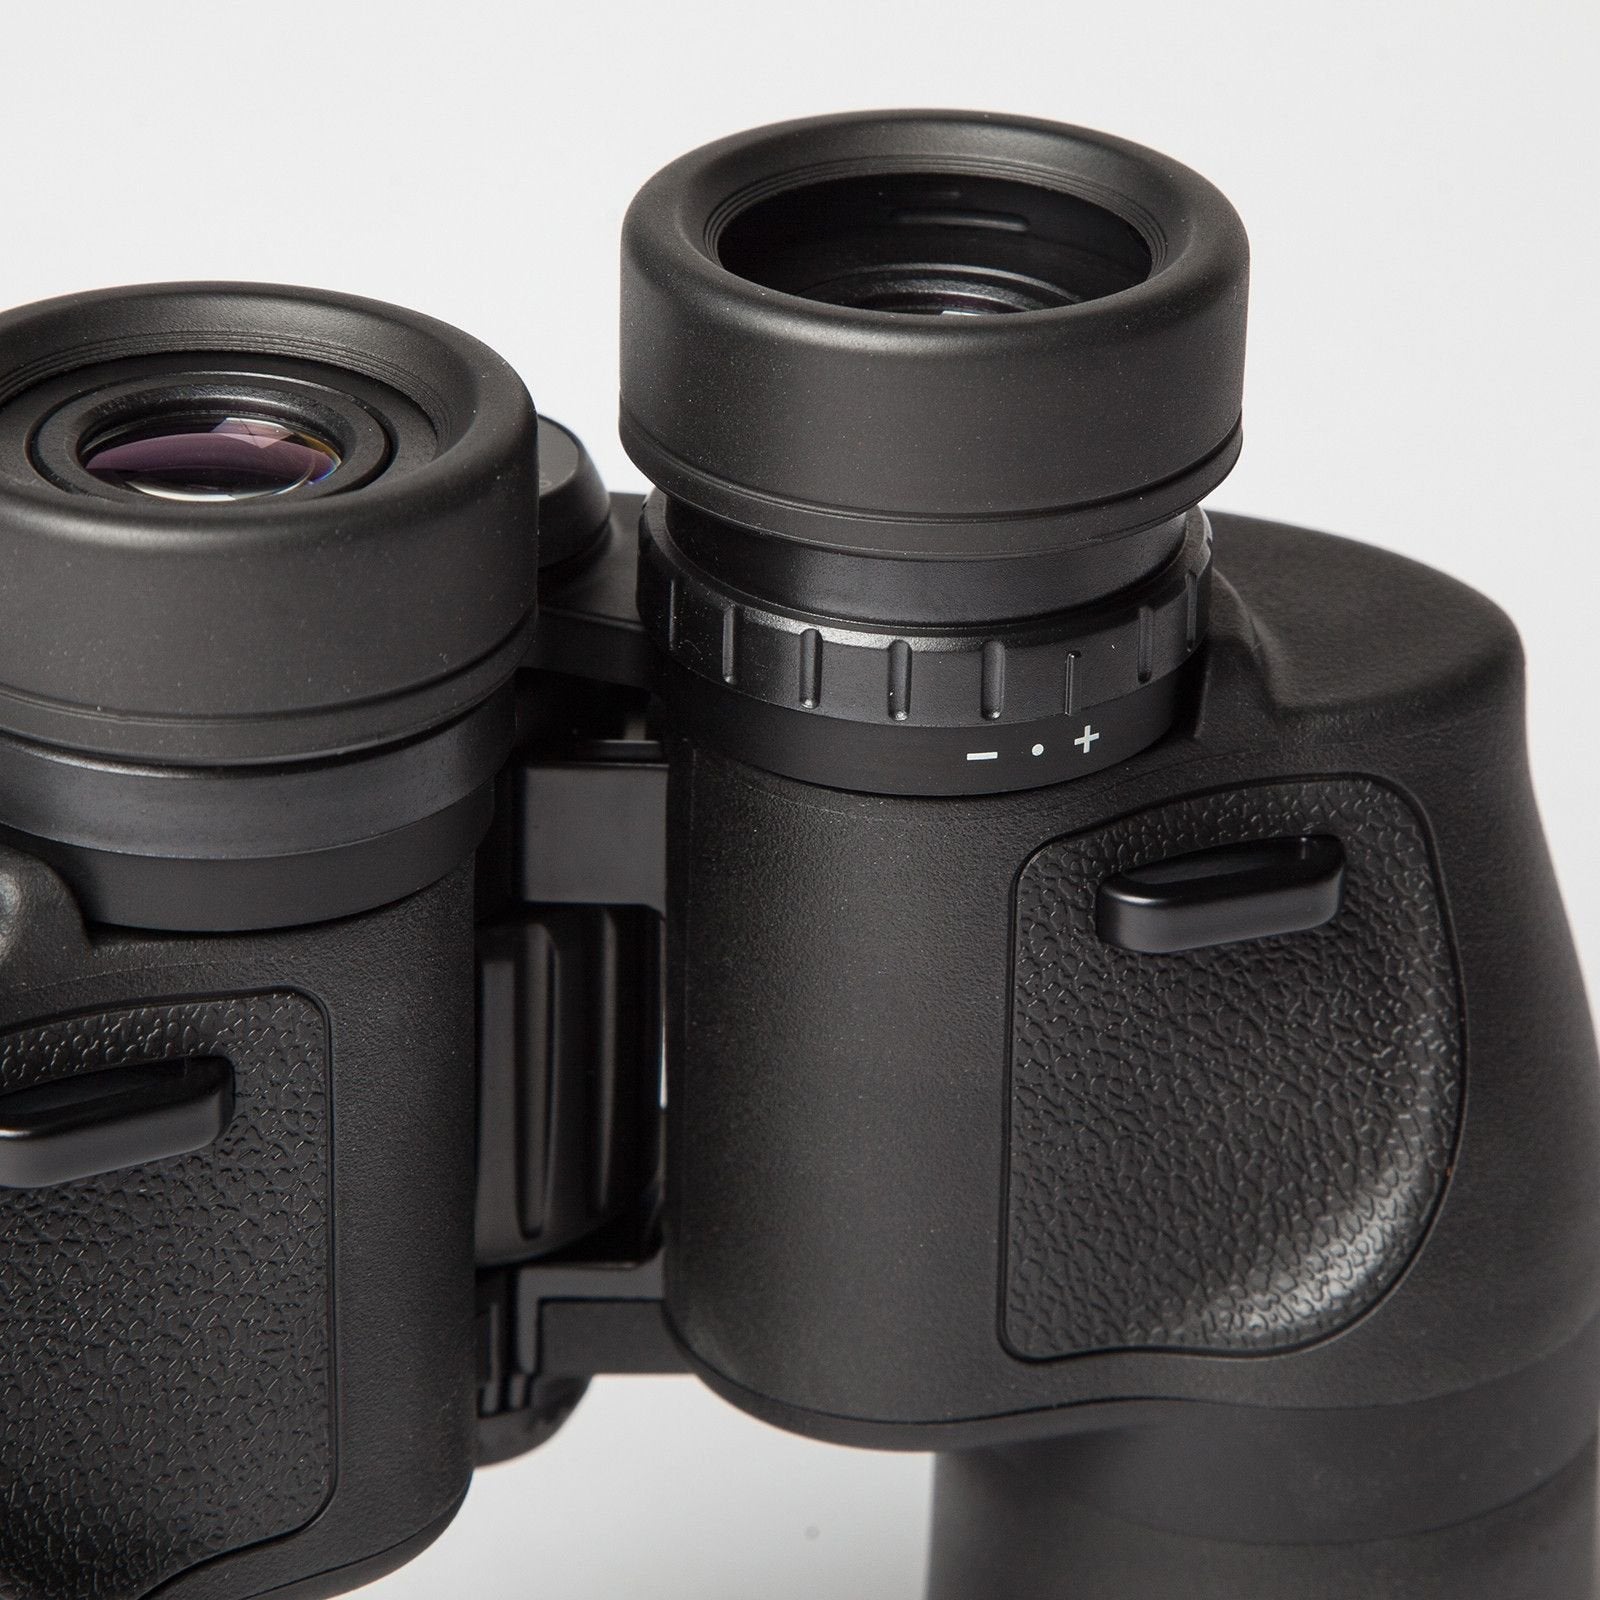 Nikon Aculon A211 8x42 Zoom Binoculars - Black